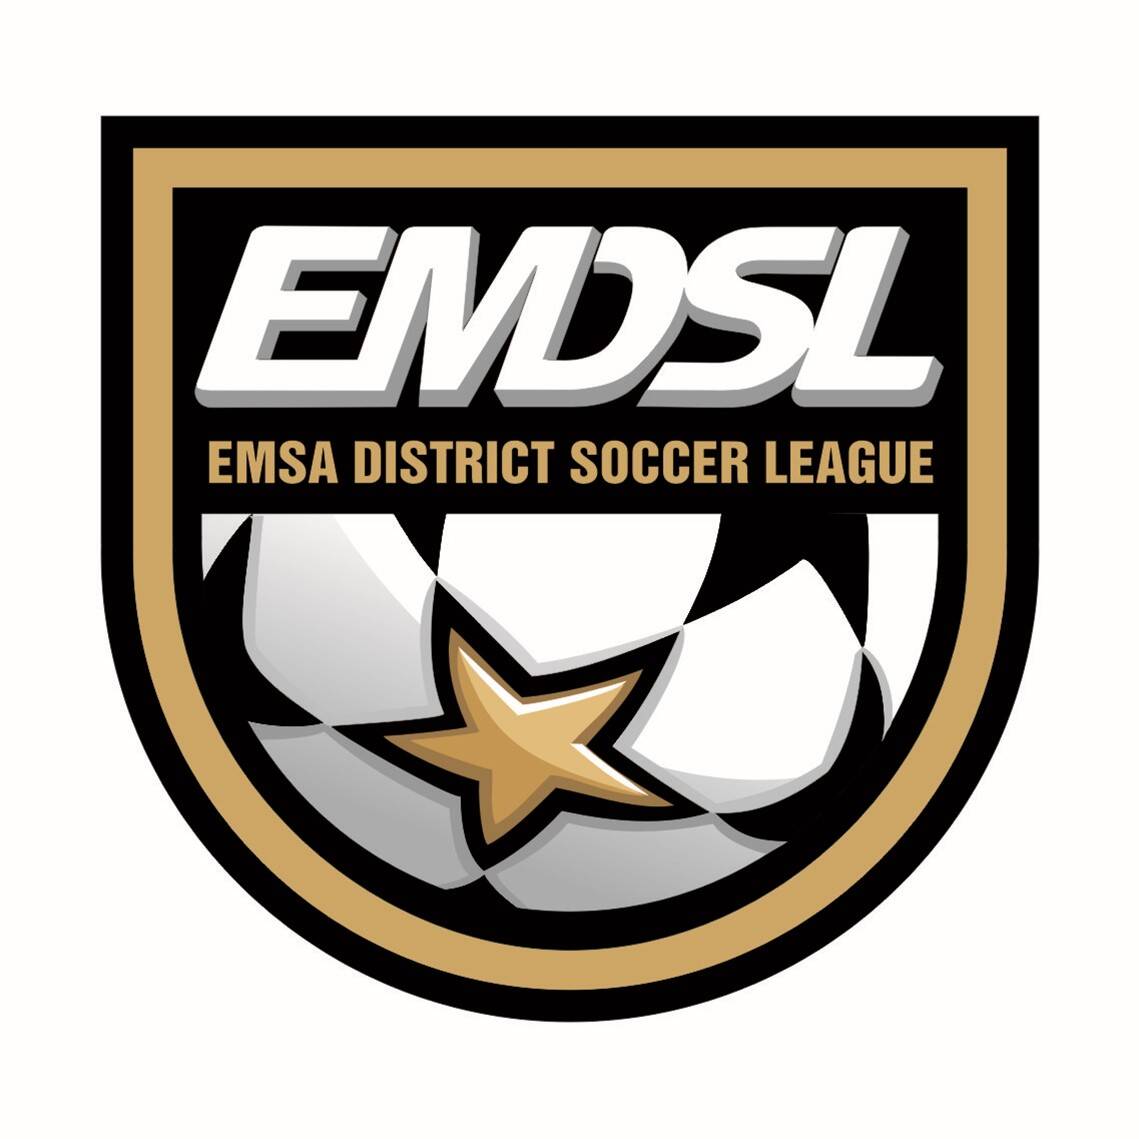 EMDSL_Logo.jpg